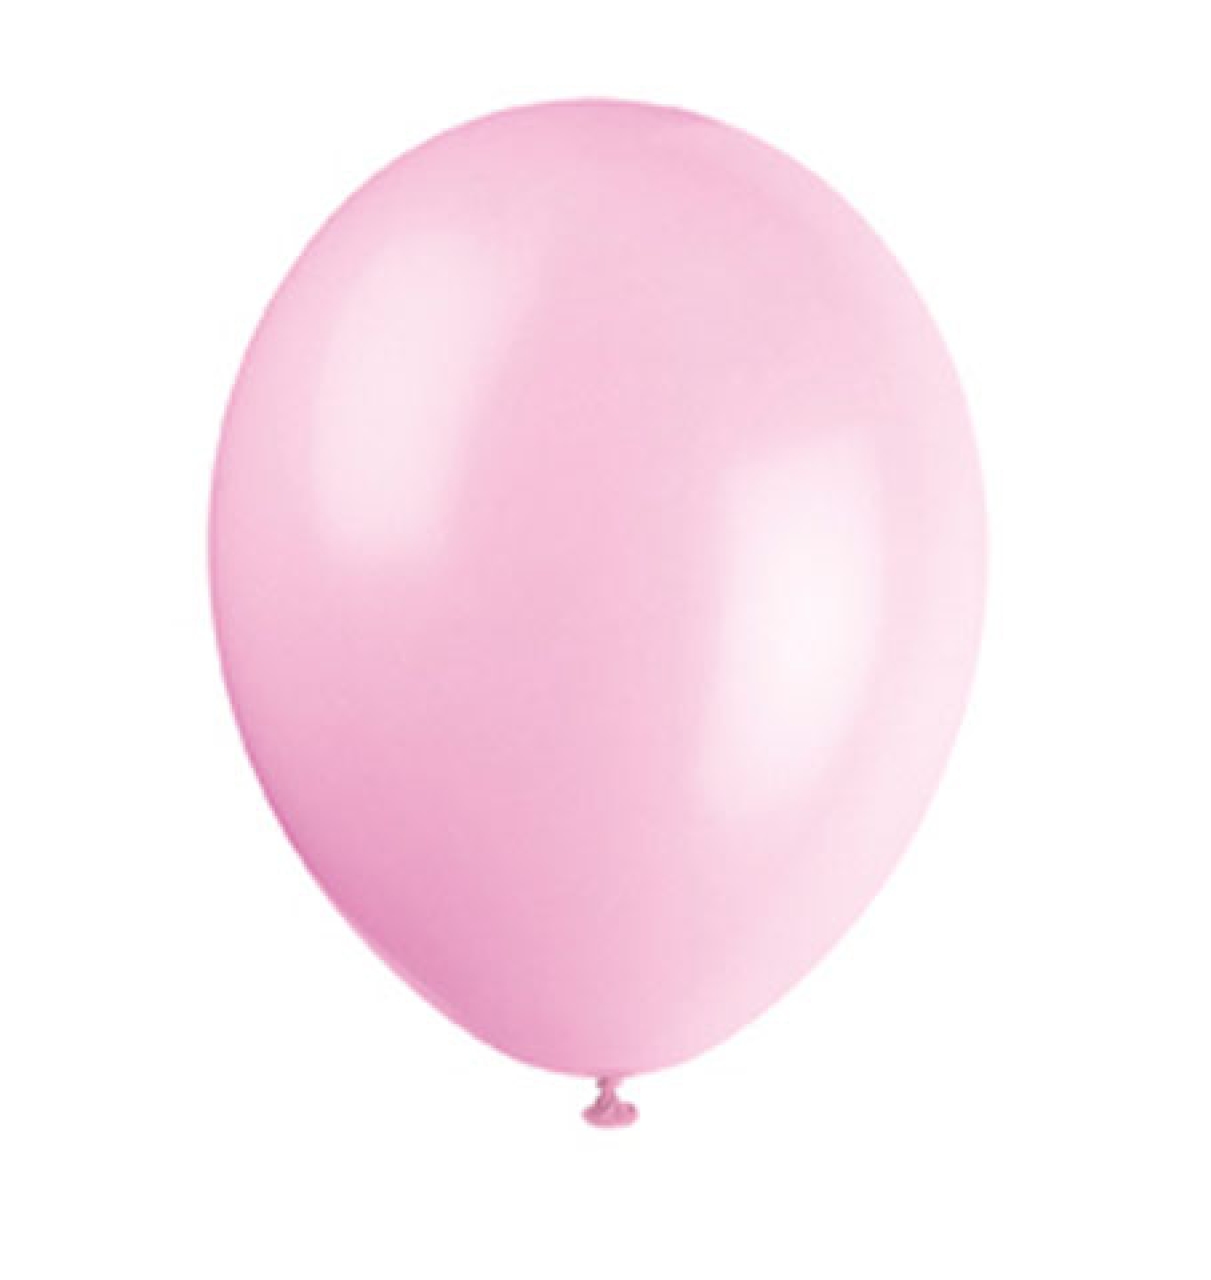 10 Party Luftballons, Farbe: Powder Pink, 30 cm